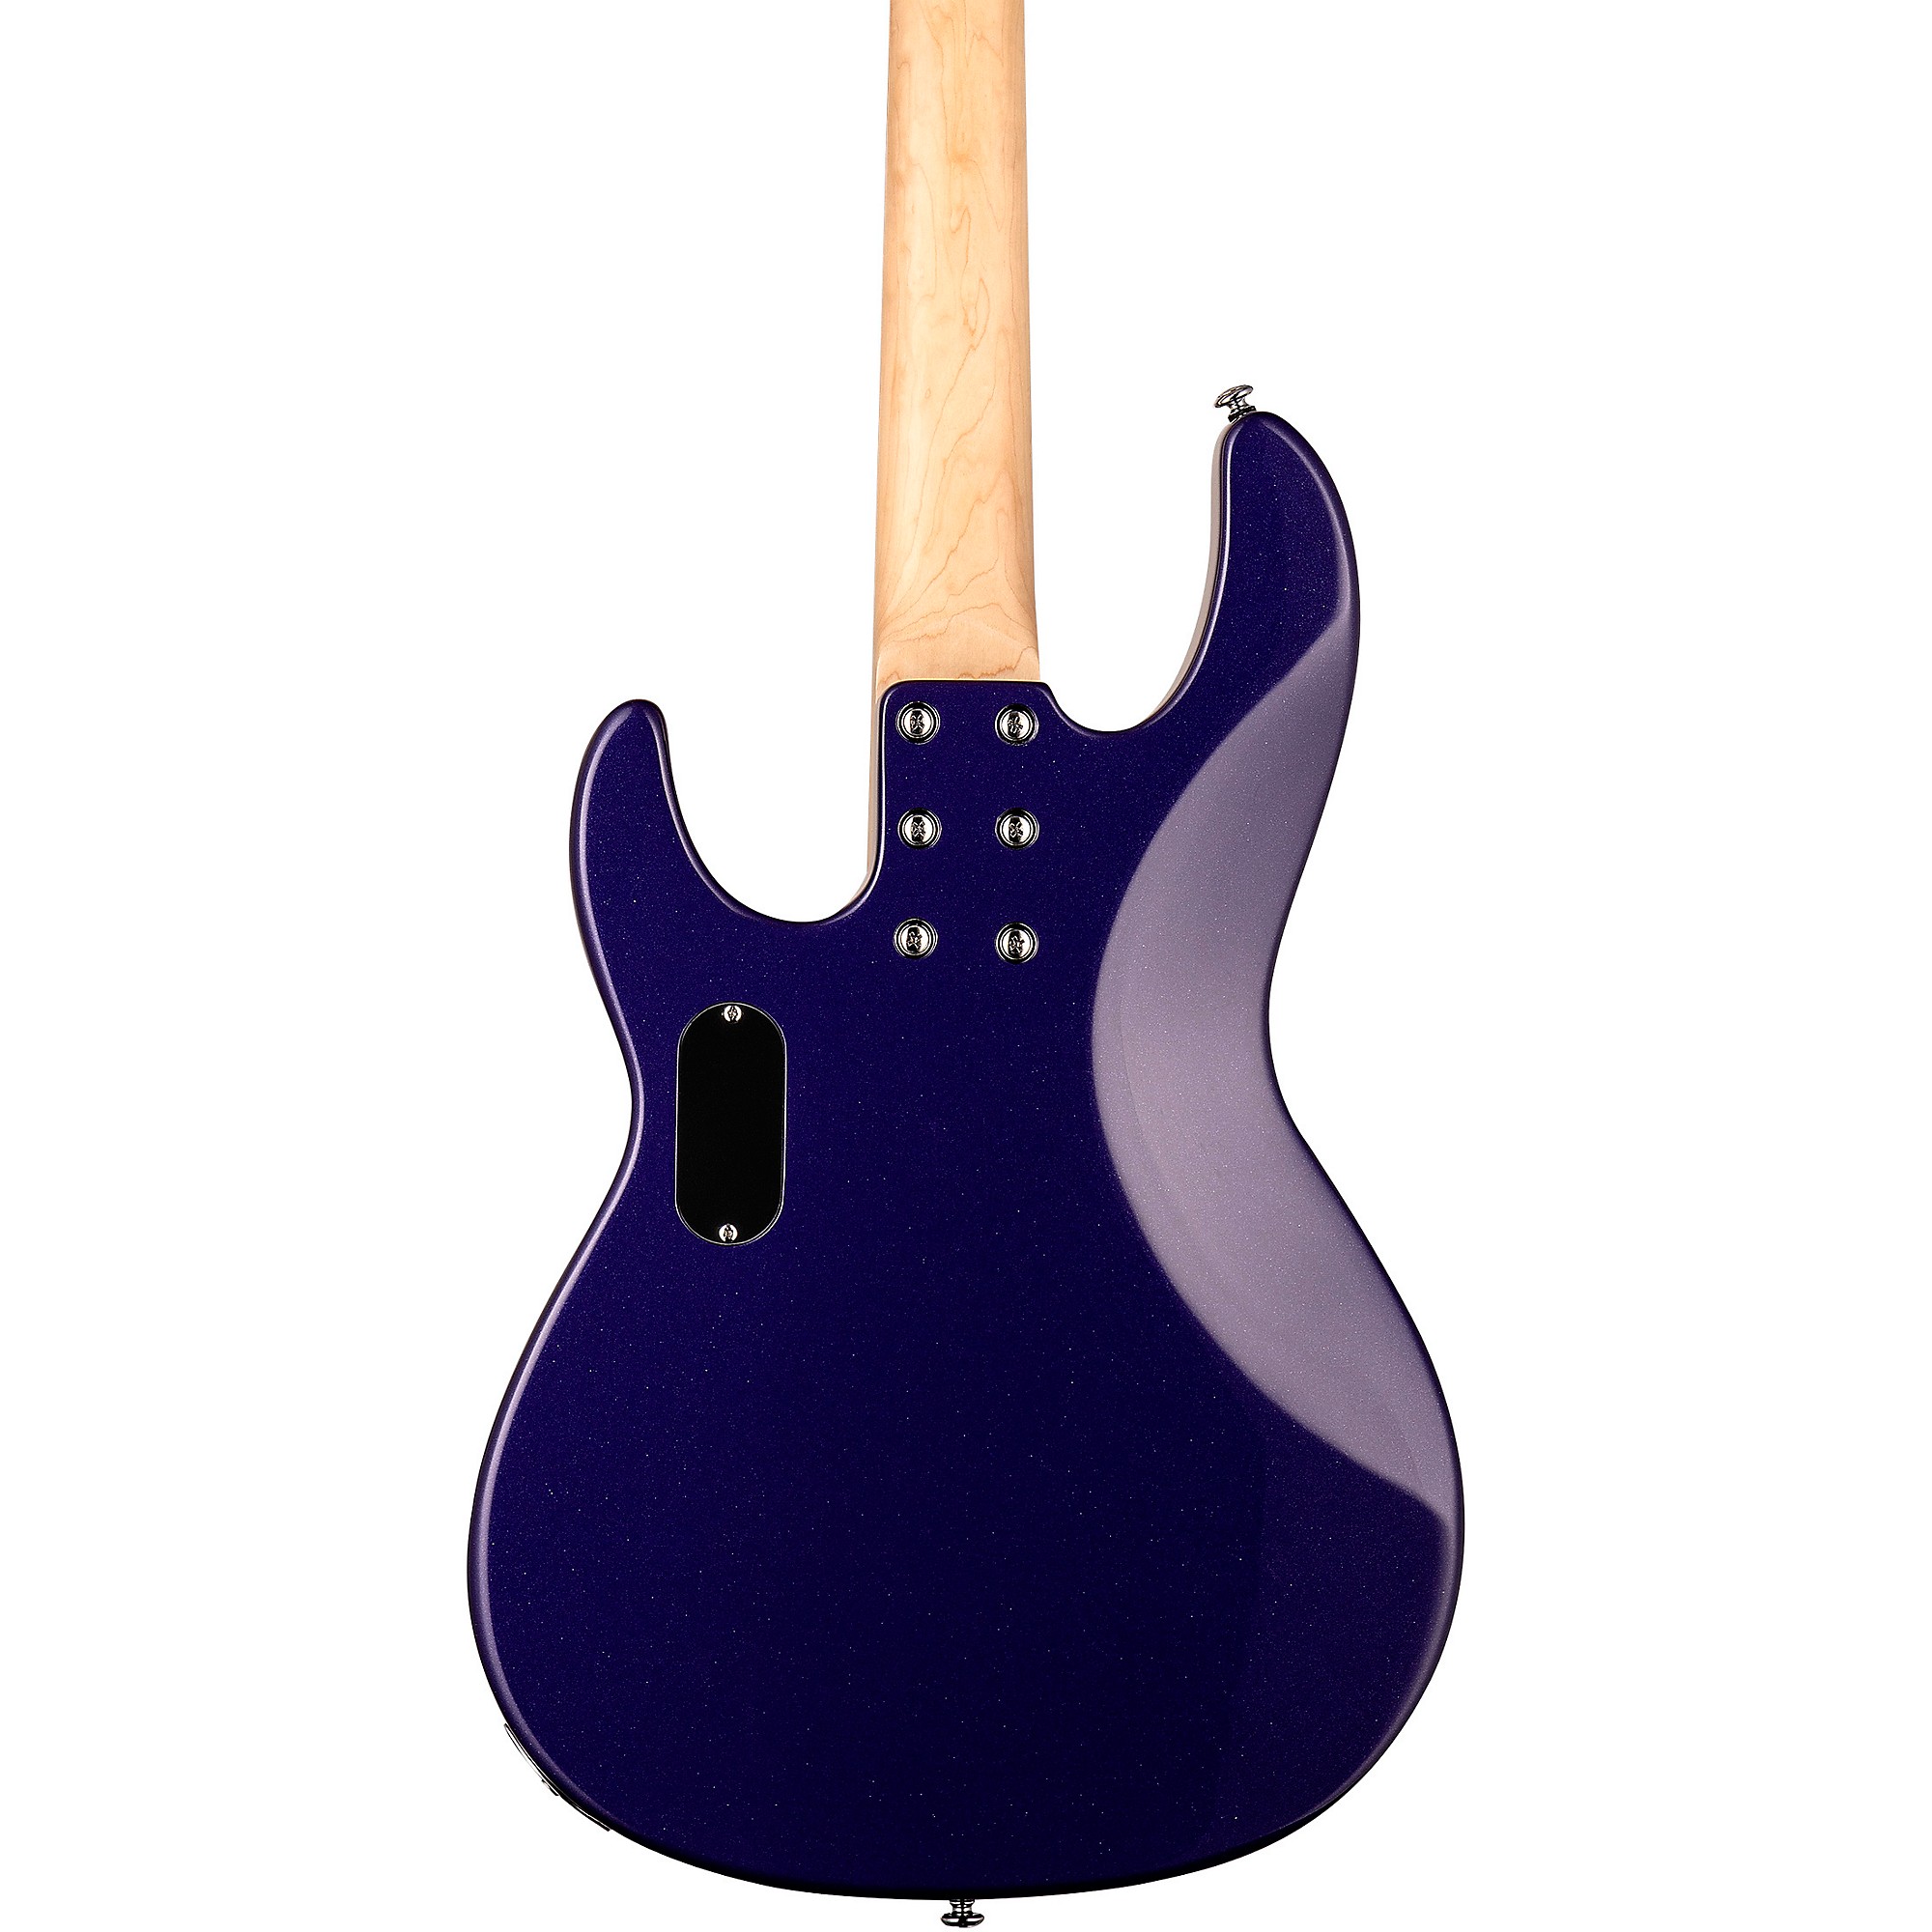 ESP LTD AP-204 Bass Guitar - Dark Metallic Purple